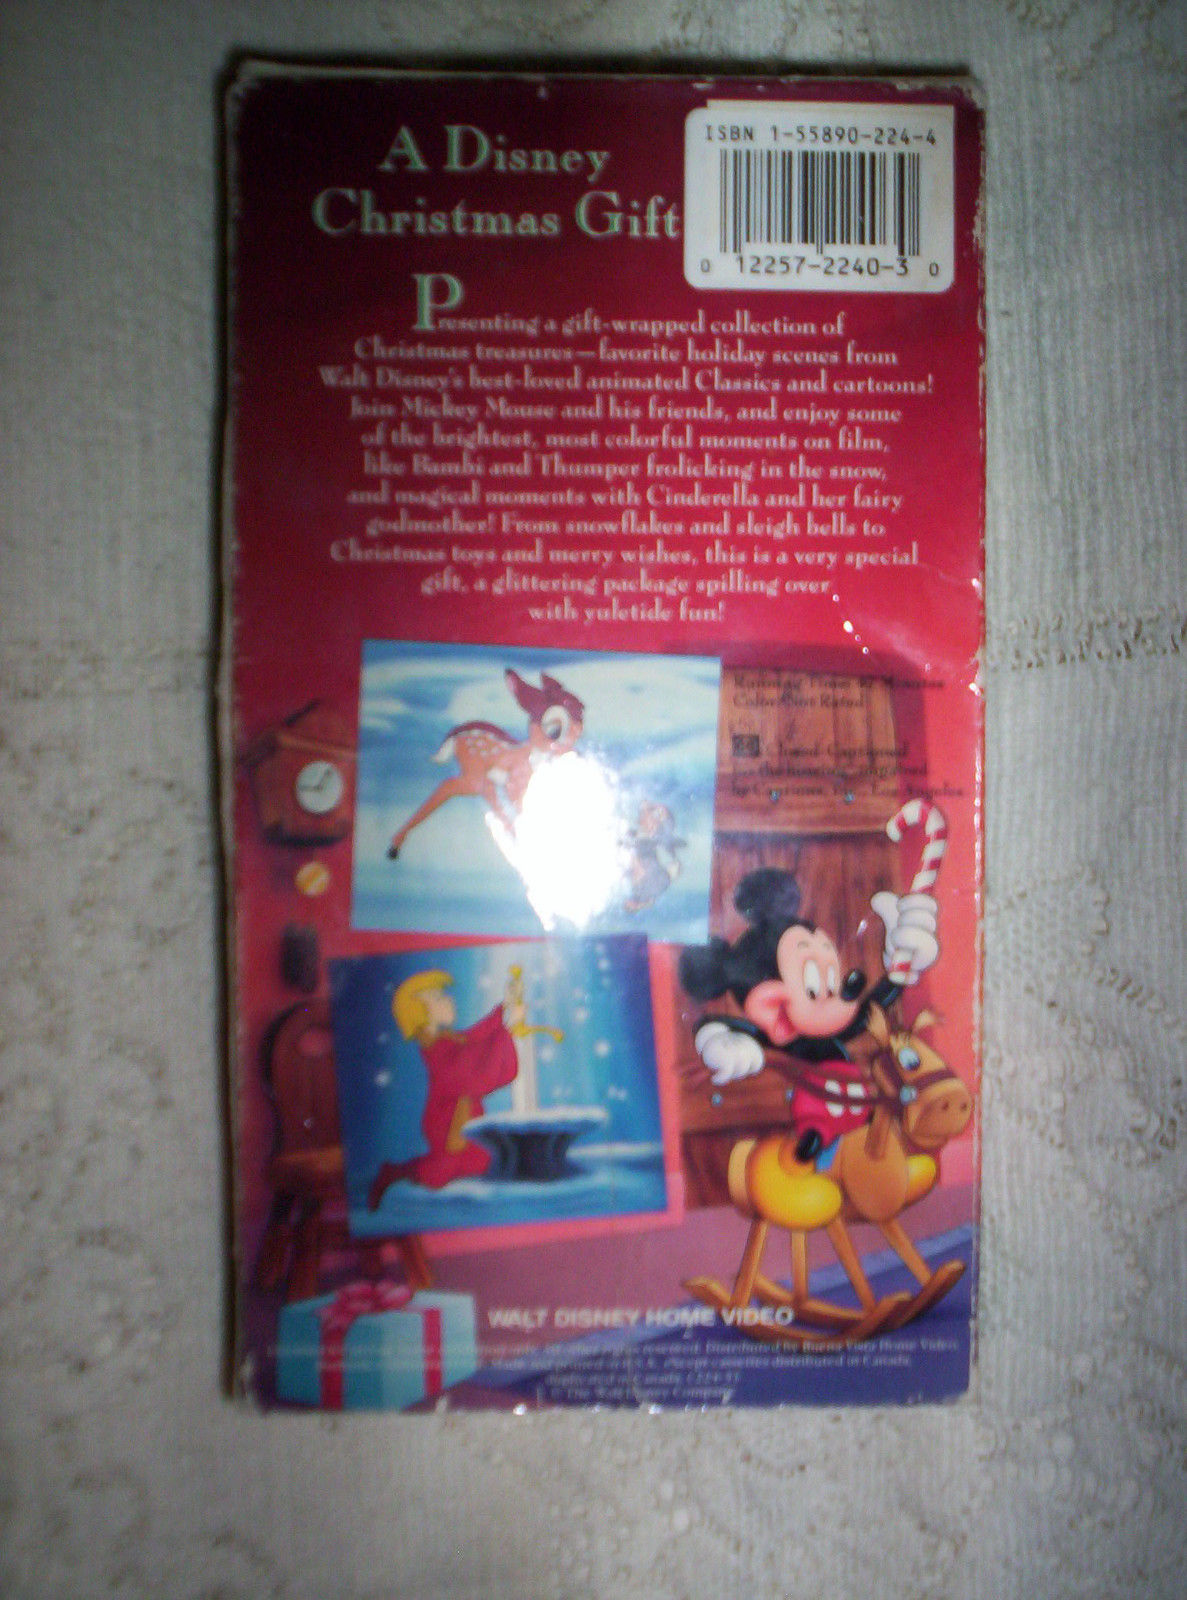 Image A Disney Christmas Gift VHS Back.JPG Disney Wiki